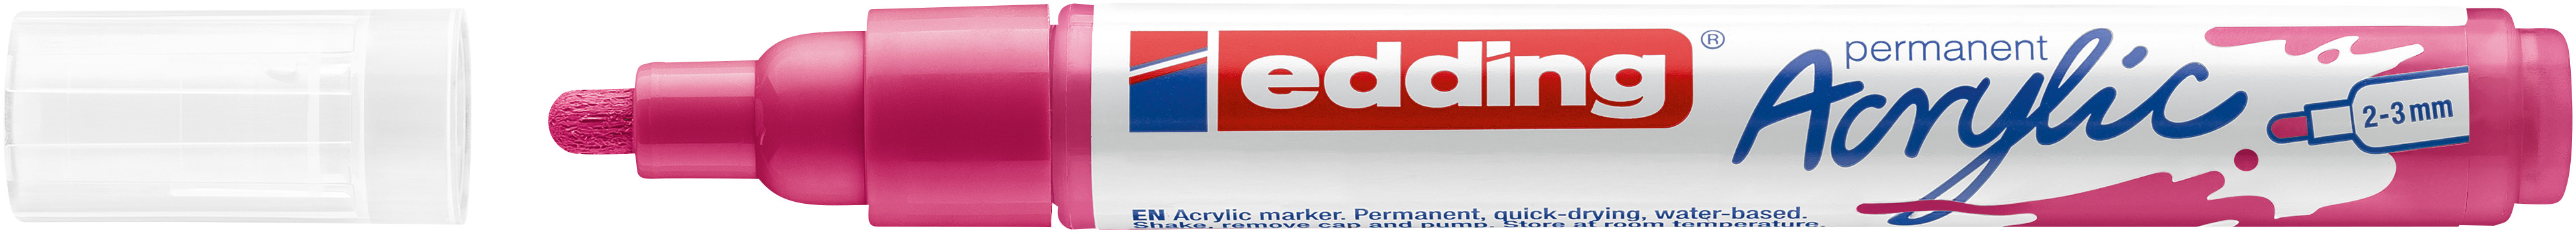 EDDING Acrylmarker 5100 2-3mm 5100-909 telemagenta